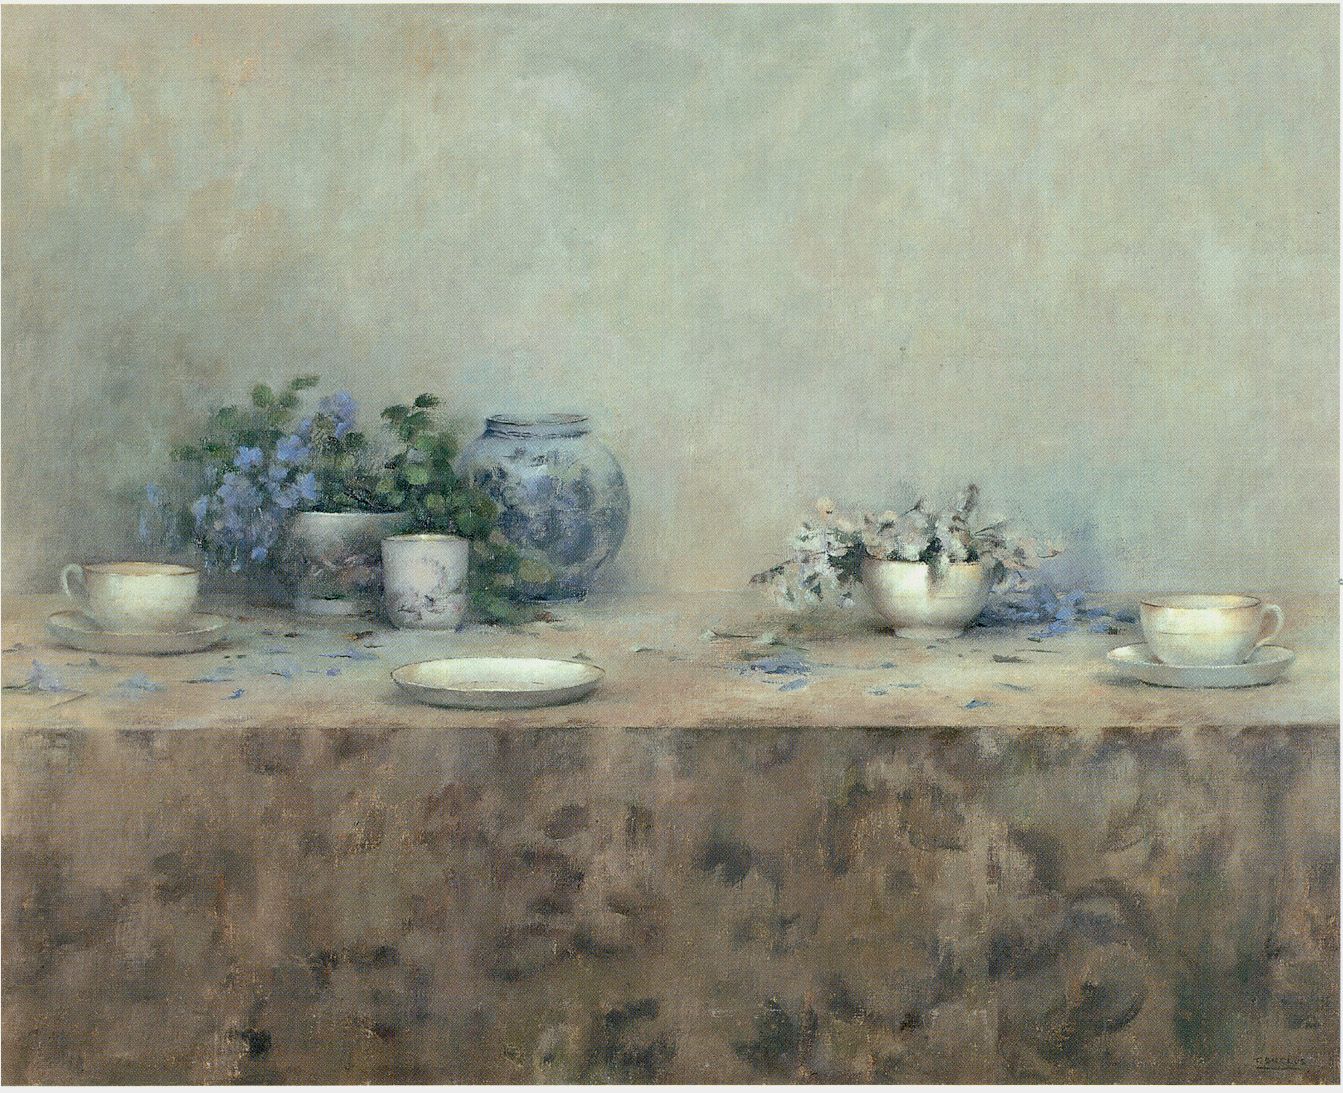 Bodegón de las flores azules (2000), de Teresa Duclós. Óleo sobre lienzo.